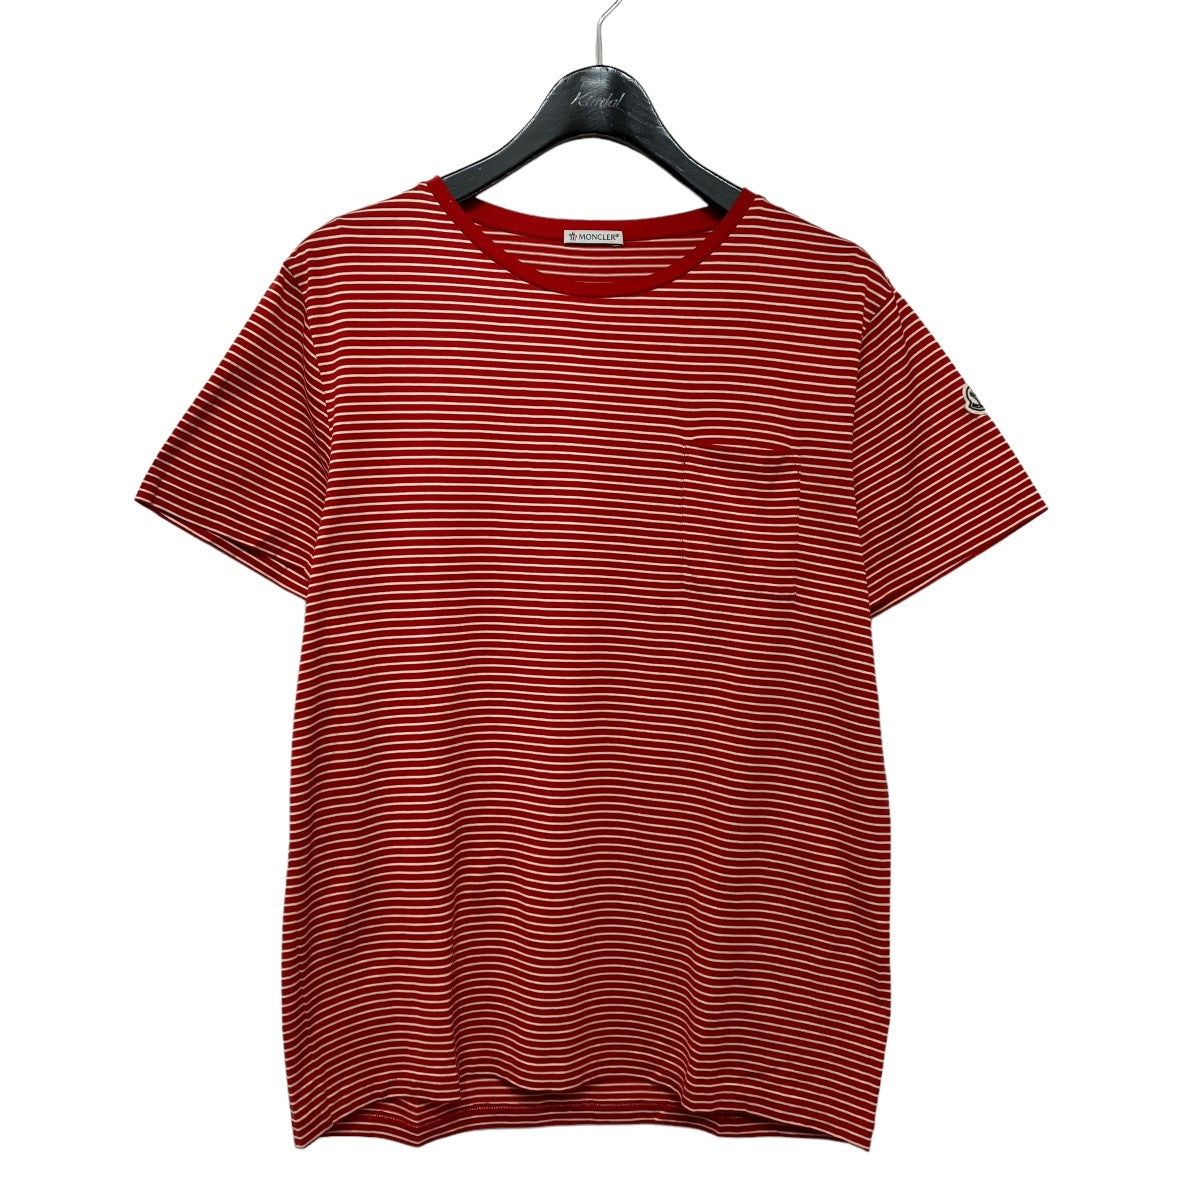 MONCLER(モンクレール) MAGLIA T-SHIRTボーダーTシャツ レッド 